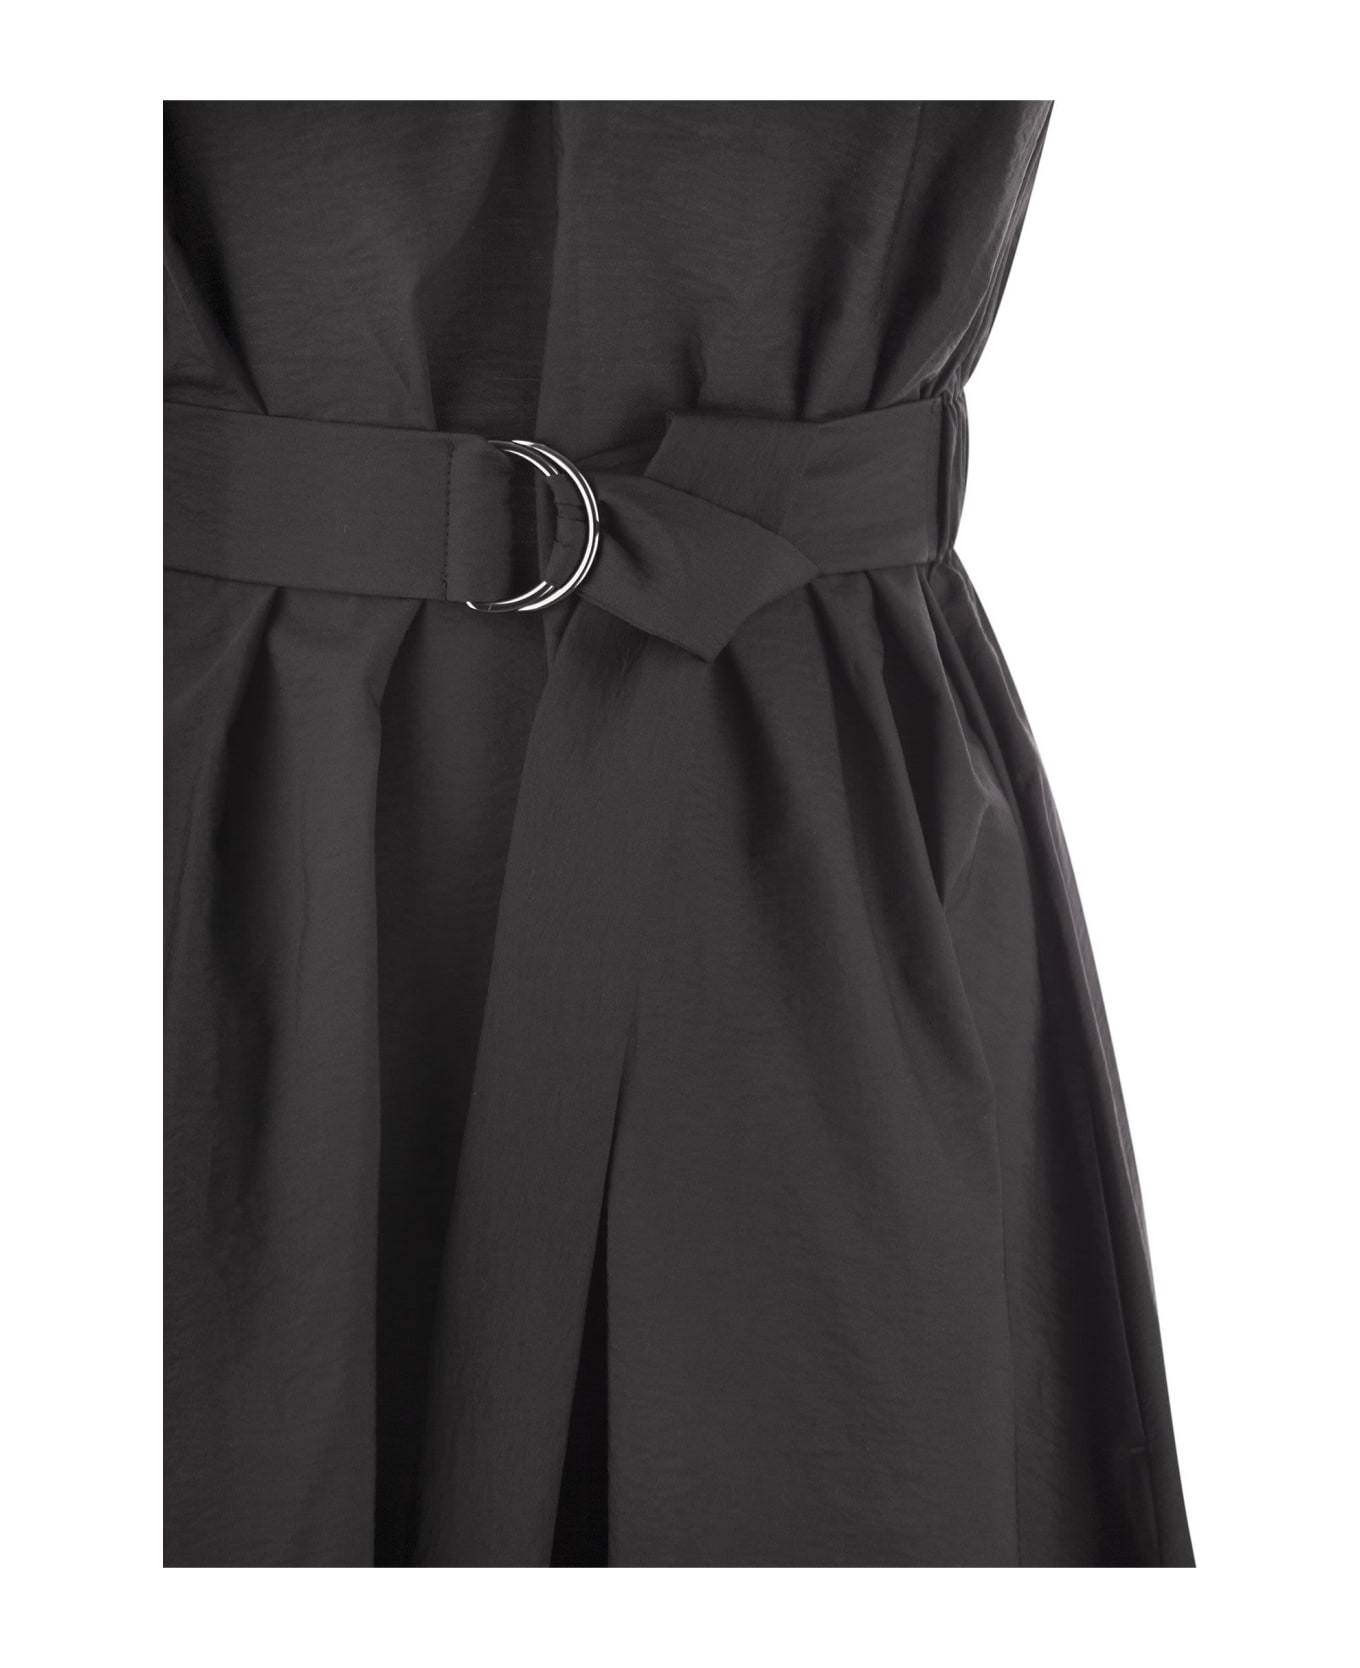 Brunello Cucinelli Sleeveless Dress With Monile - Black